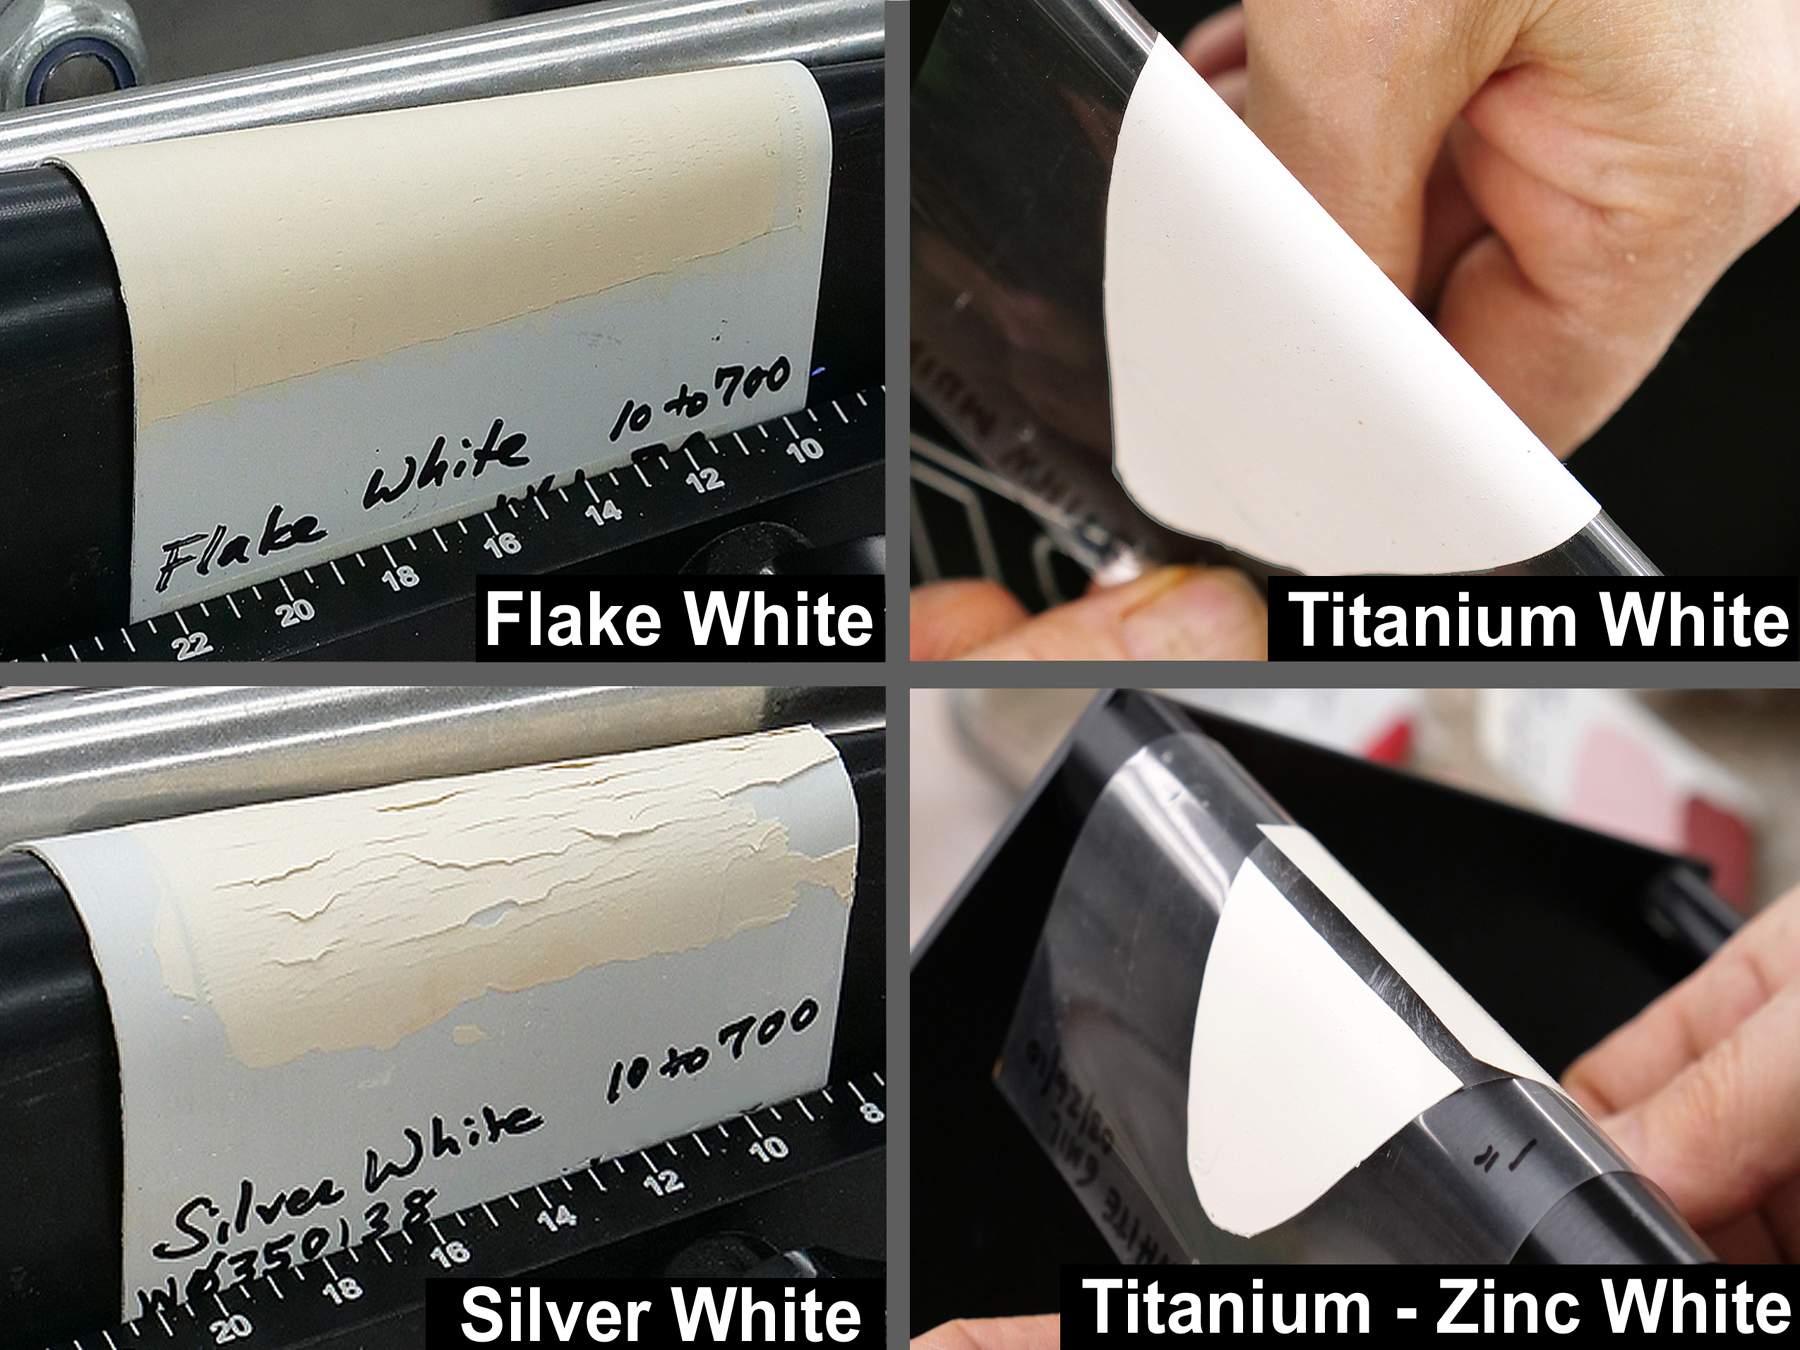 Mixing White vs. Titanium White